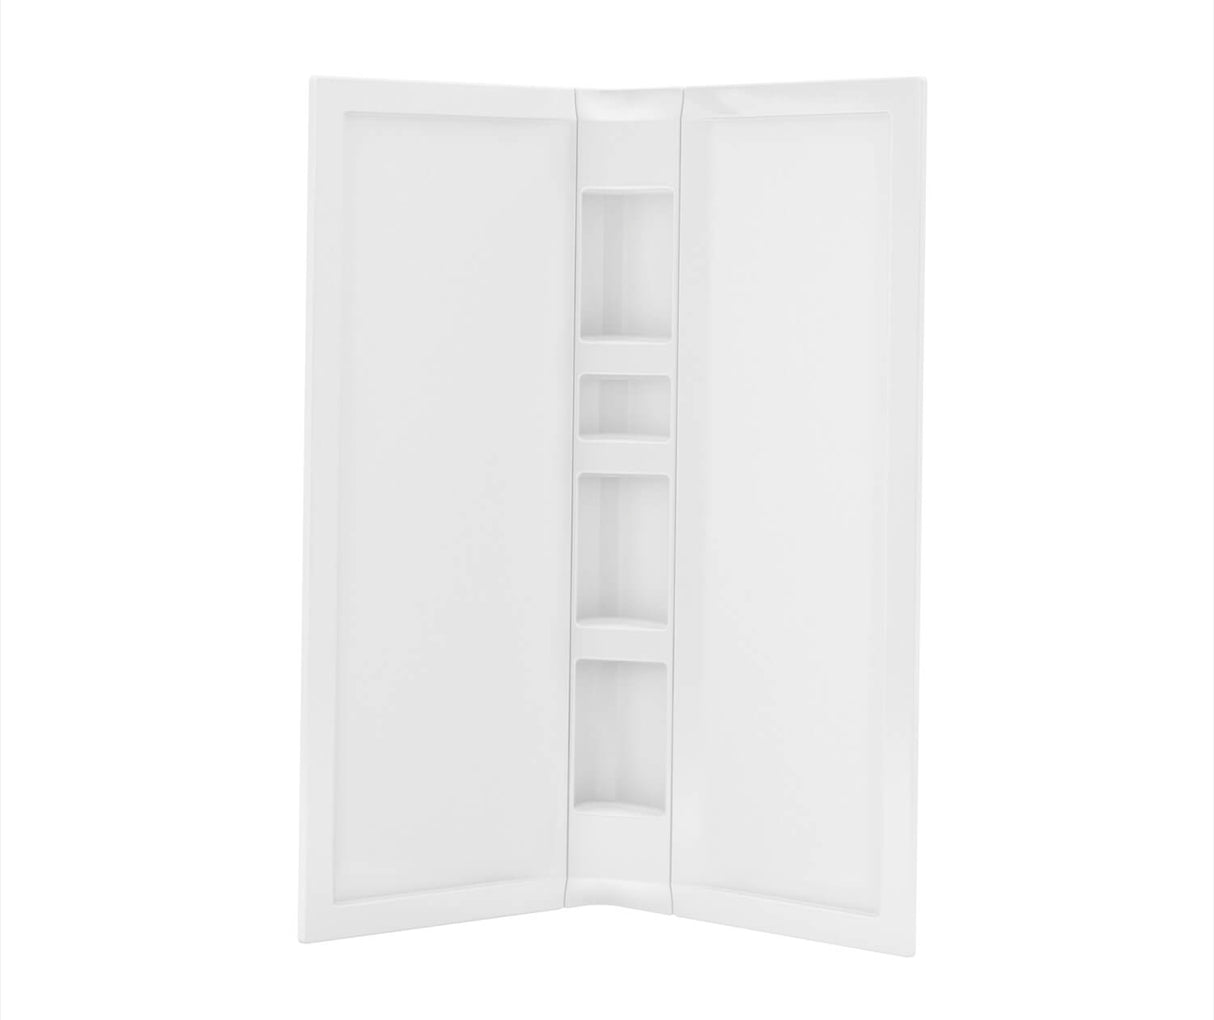 MAAX 106383-000-001-000 40 x 40 in. Acrylic Three-Piece Corner Shower Wall Kit in White